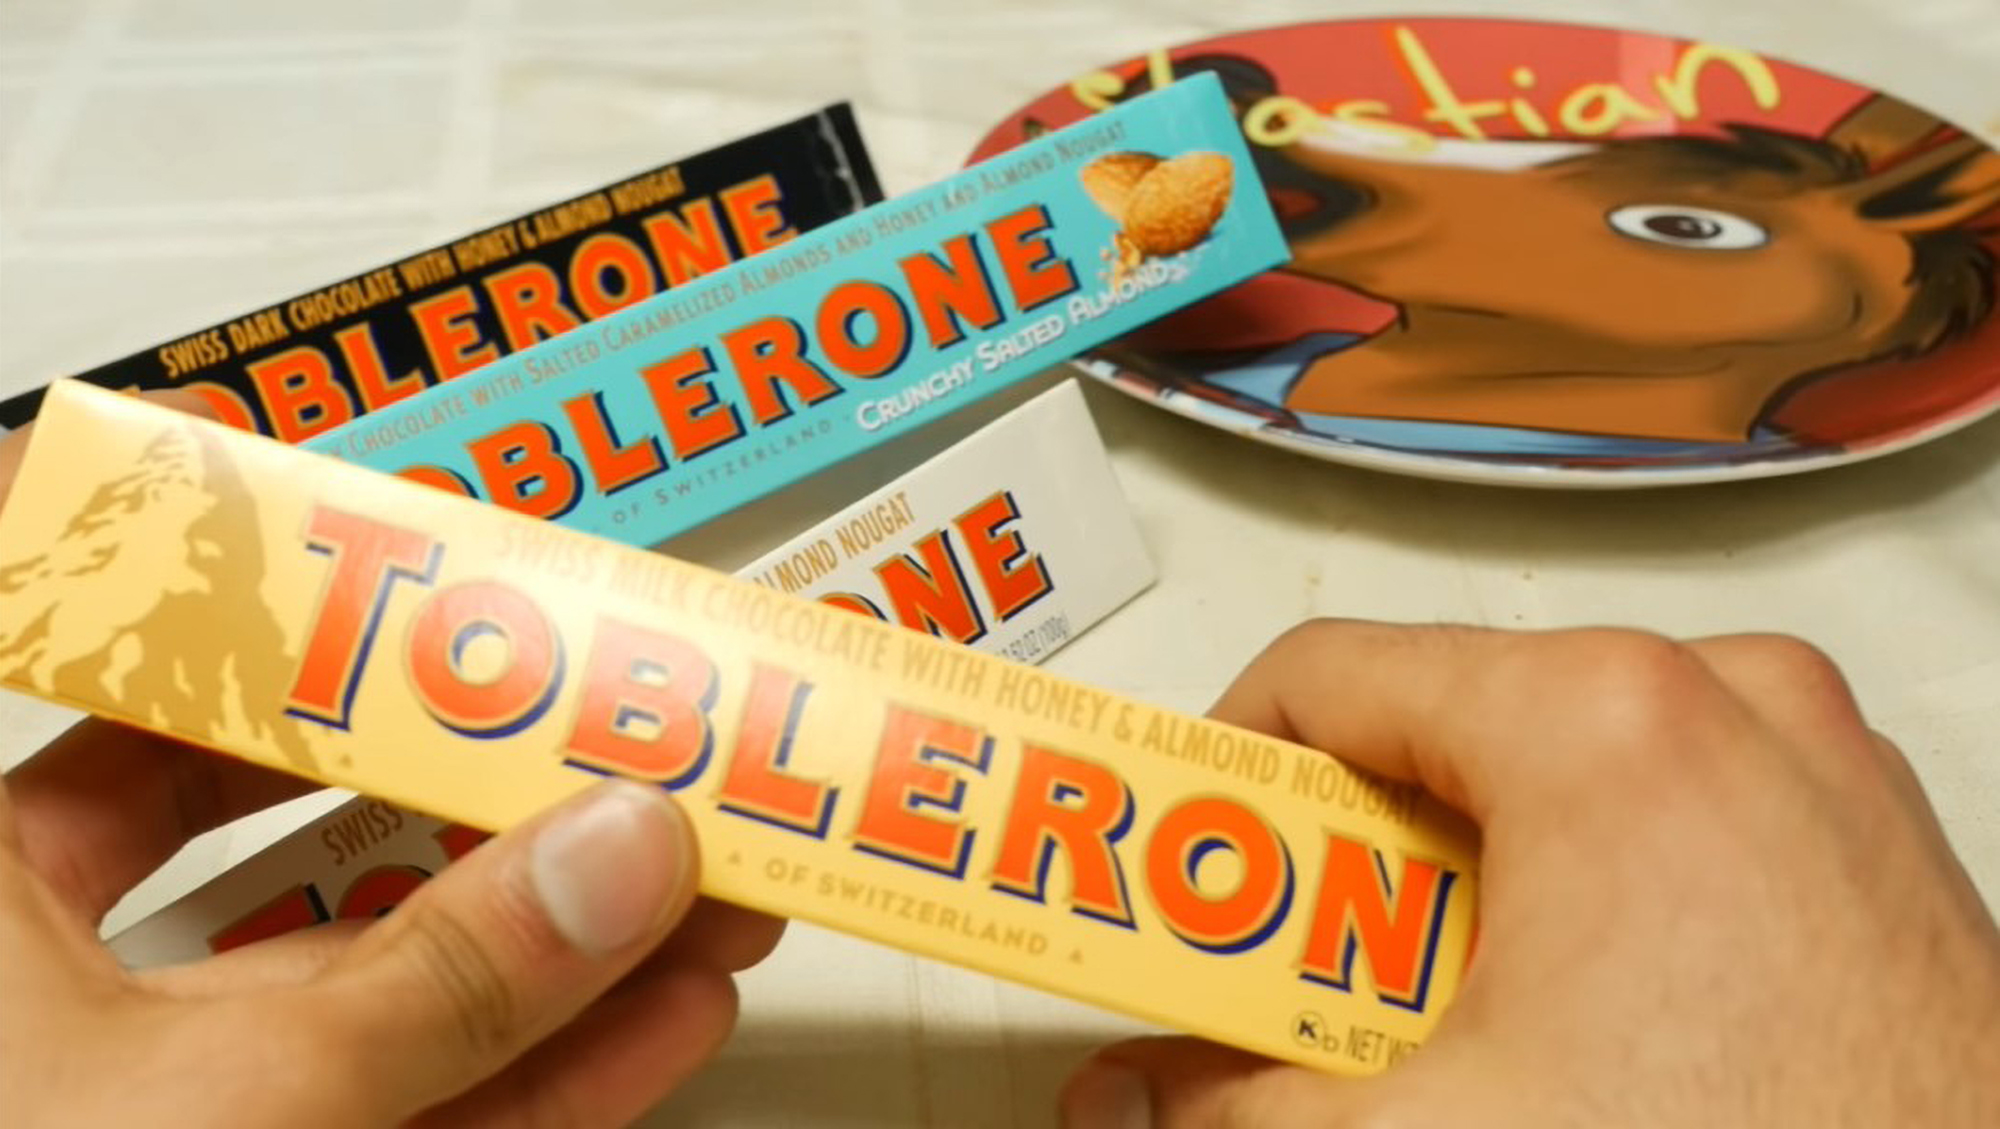 Toblerone Crunchy Salty Almond Chocolate Bars: 20-Piece Box